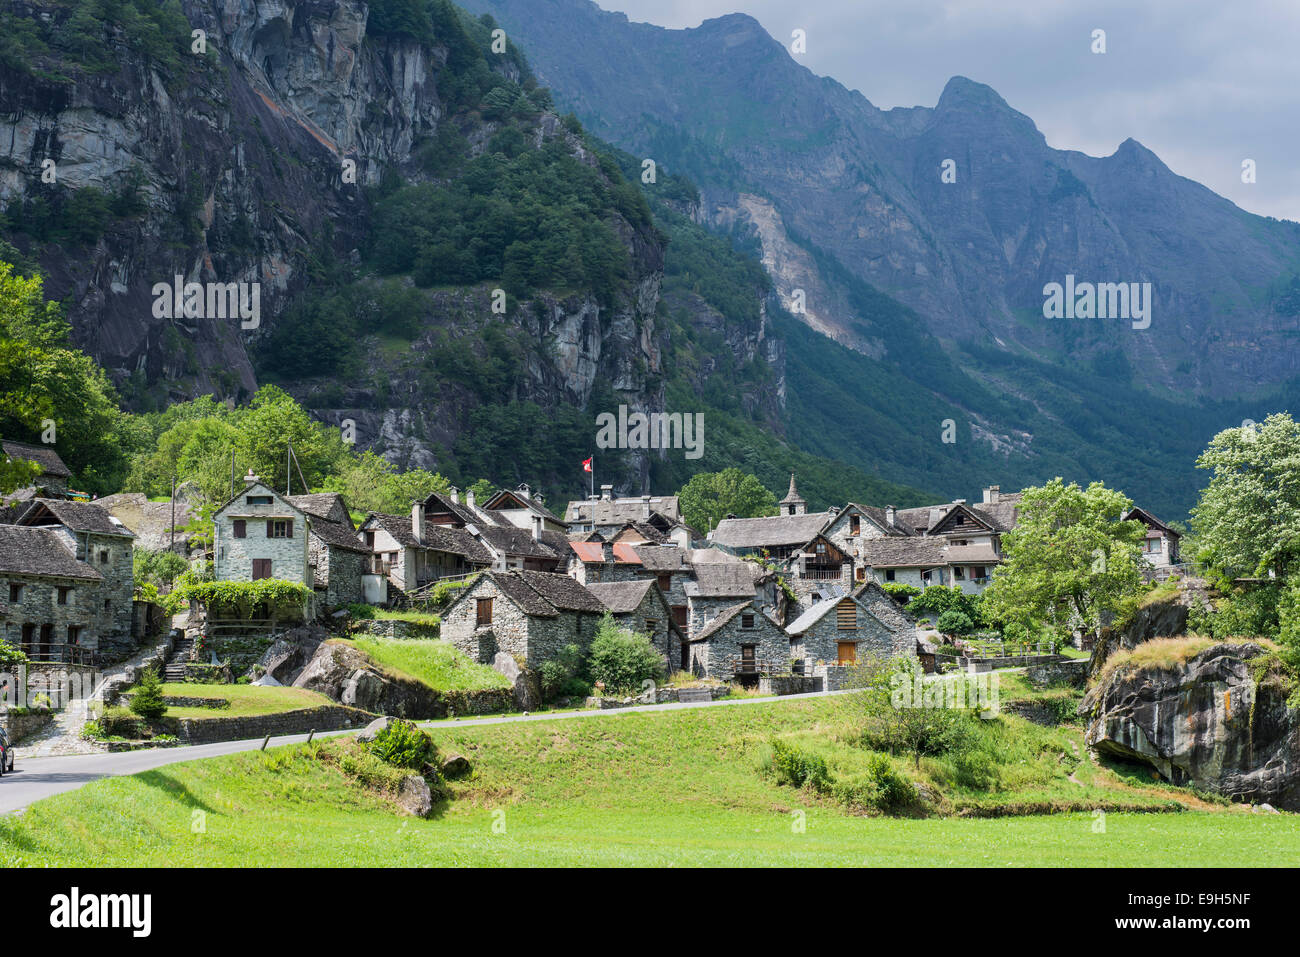 Traditional stone houses in the community of Sonlerto, Bavona Valley, Sonlerto, Cevio, Canton of Ticino, Switzerland Stock Photo